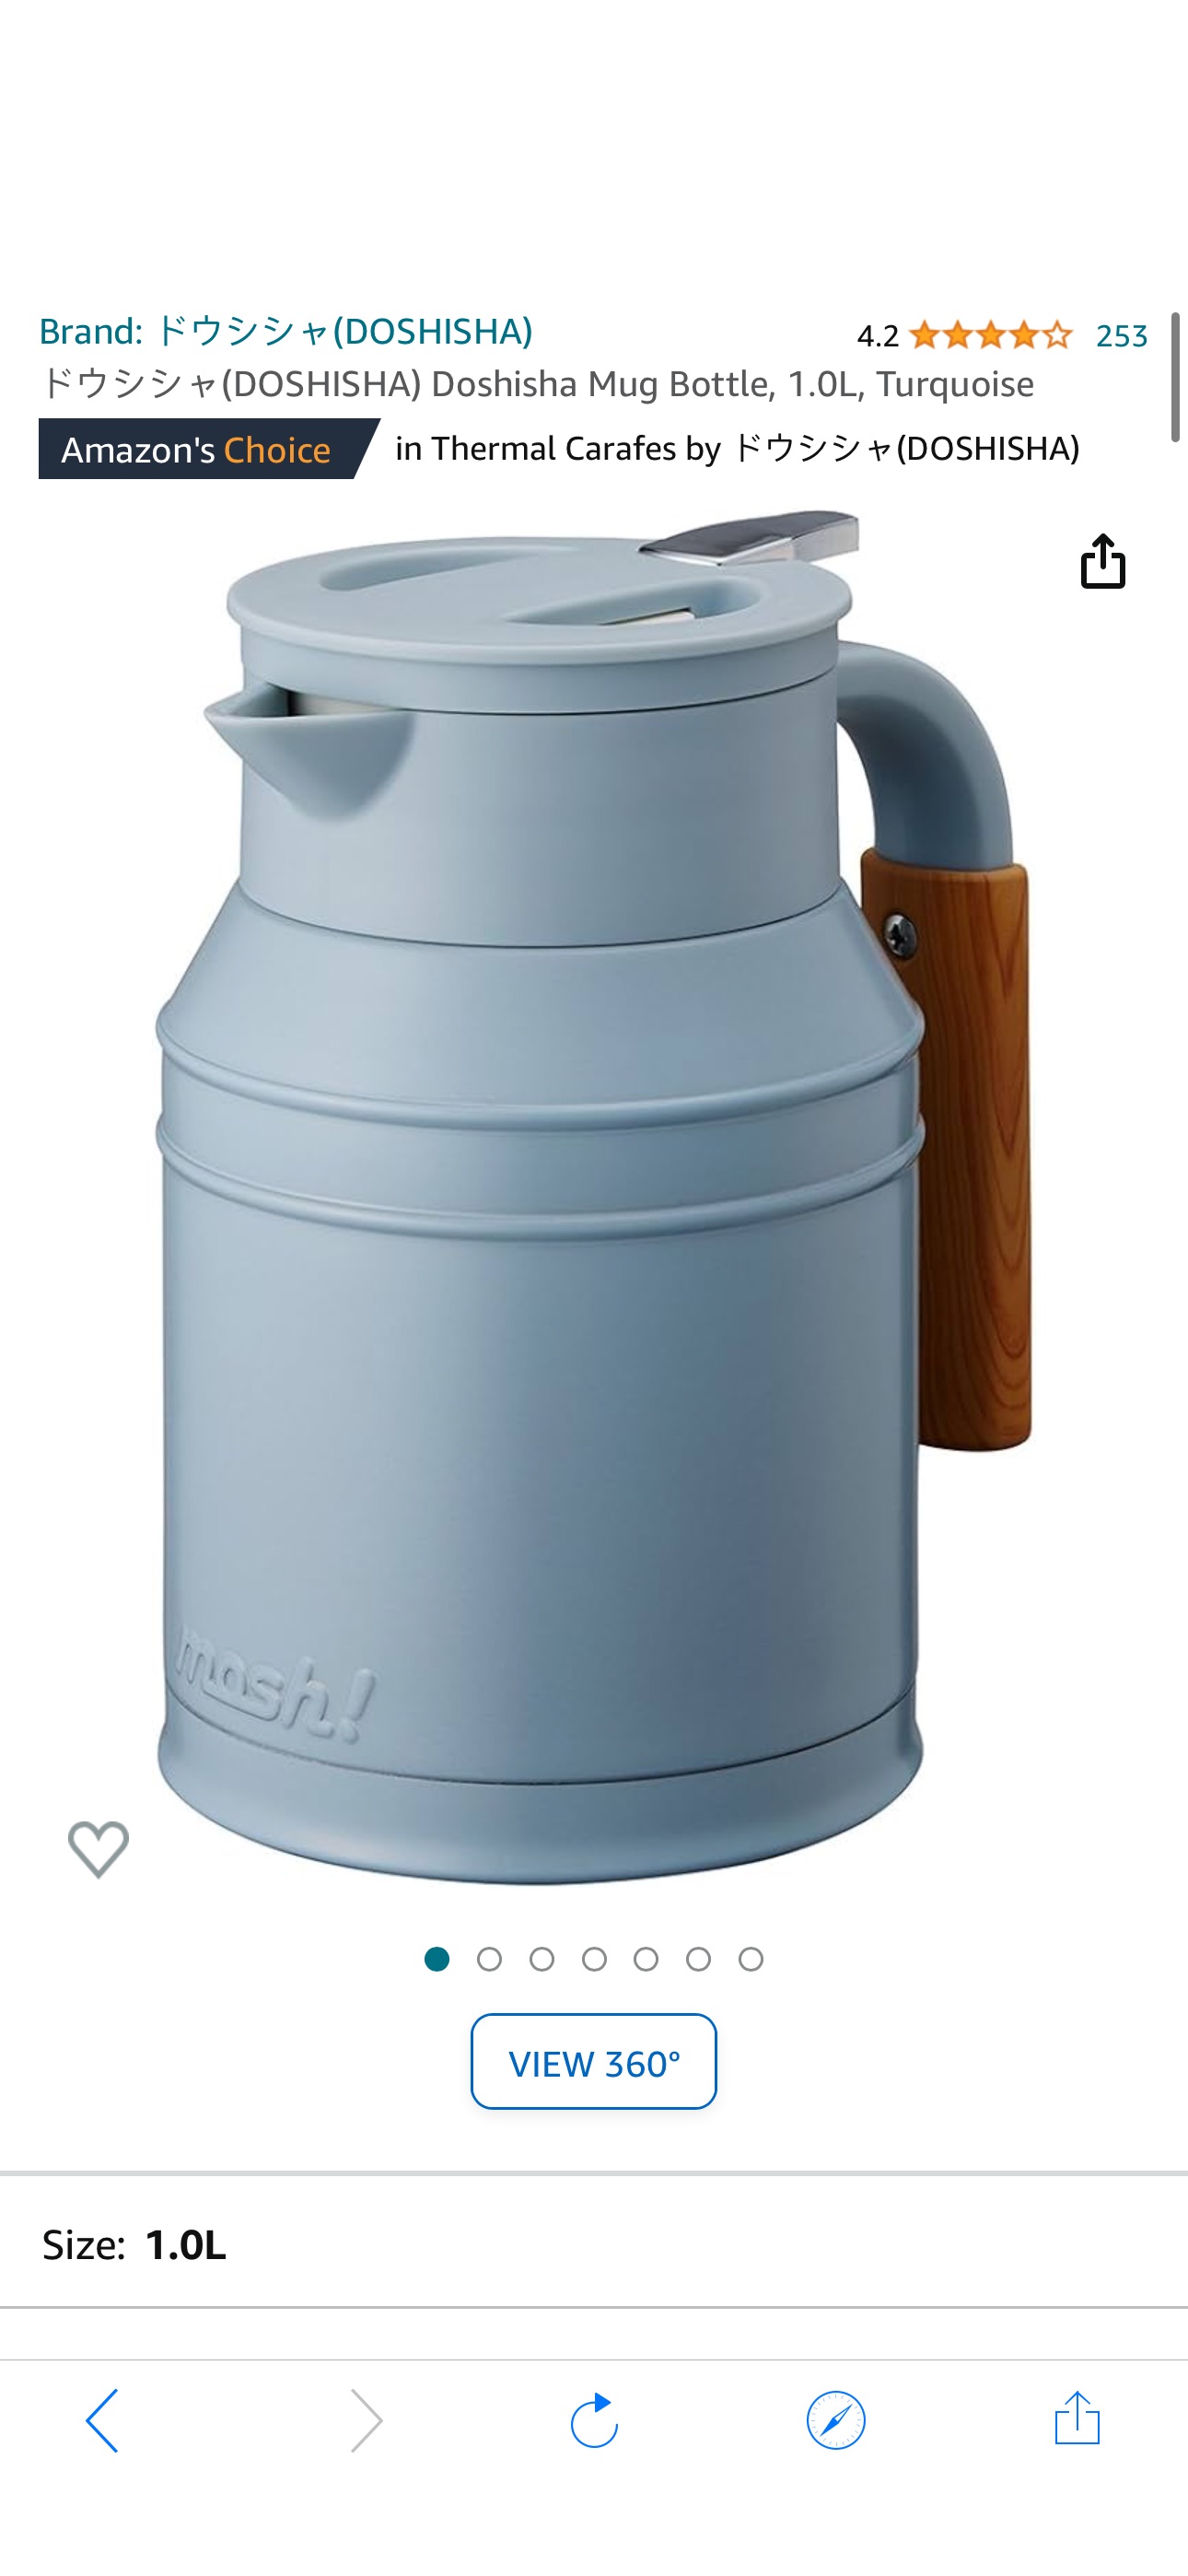 Amazon.com: ドウシシャ(DOSHISHA) Doshisha Mug Bottle, 1.0L, Turquoise : Home & Kitchen